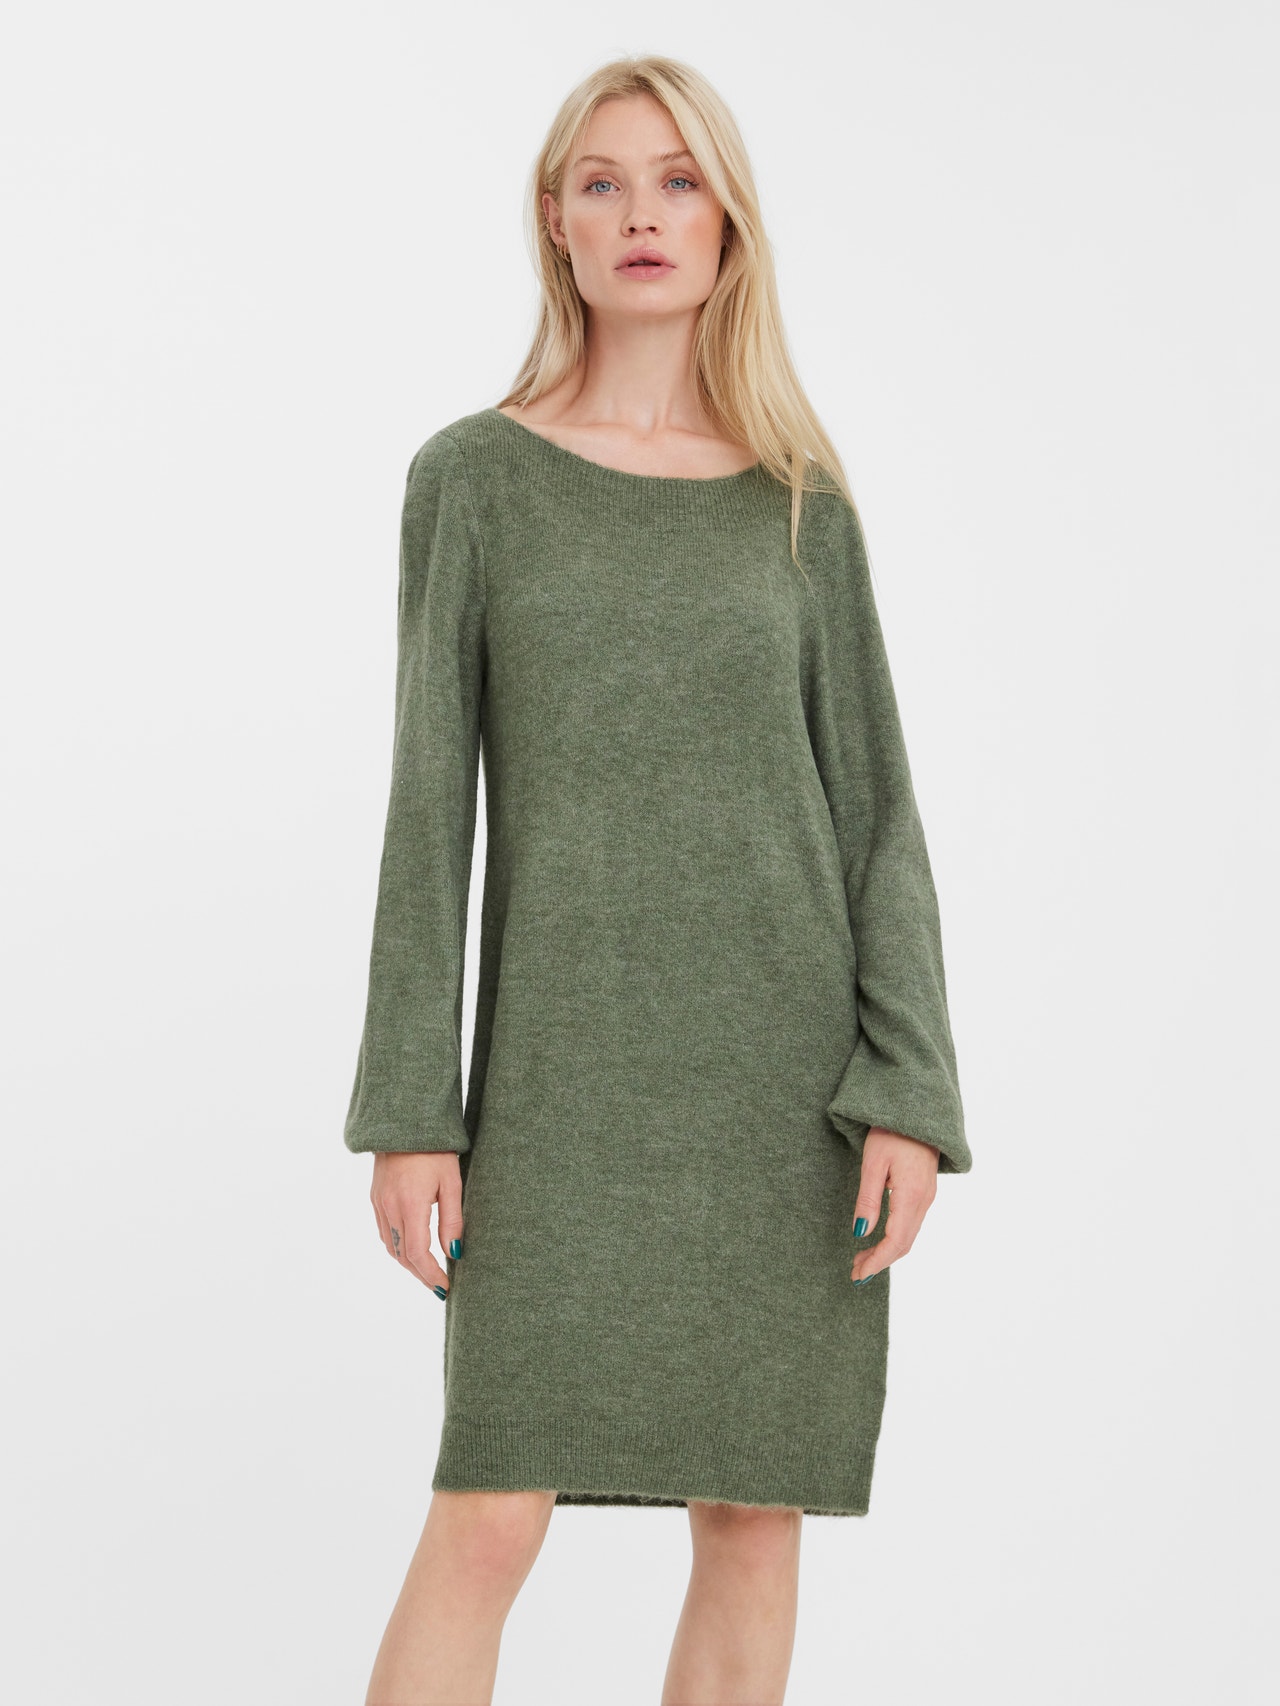 openbaring Respectvol Romantiek Regular fit Boothals Ballonmouwen Korte jurk | Medium Green | Vero Moda®